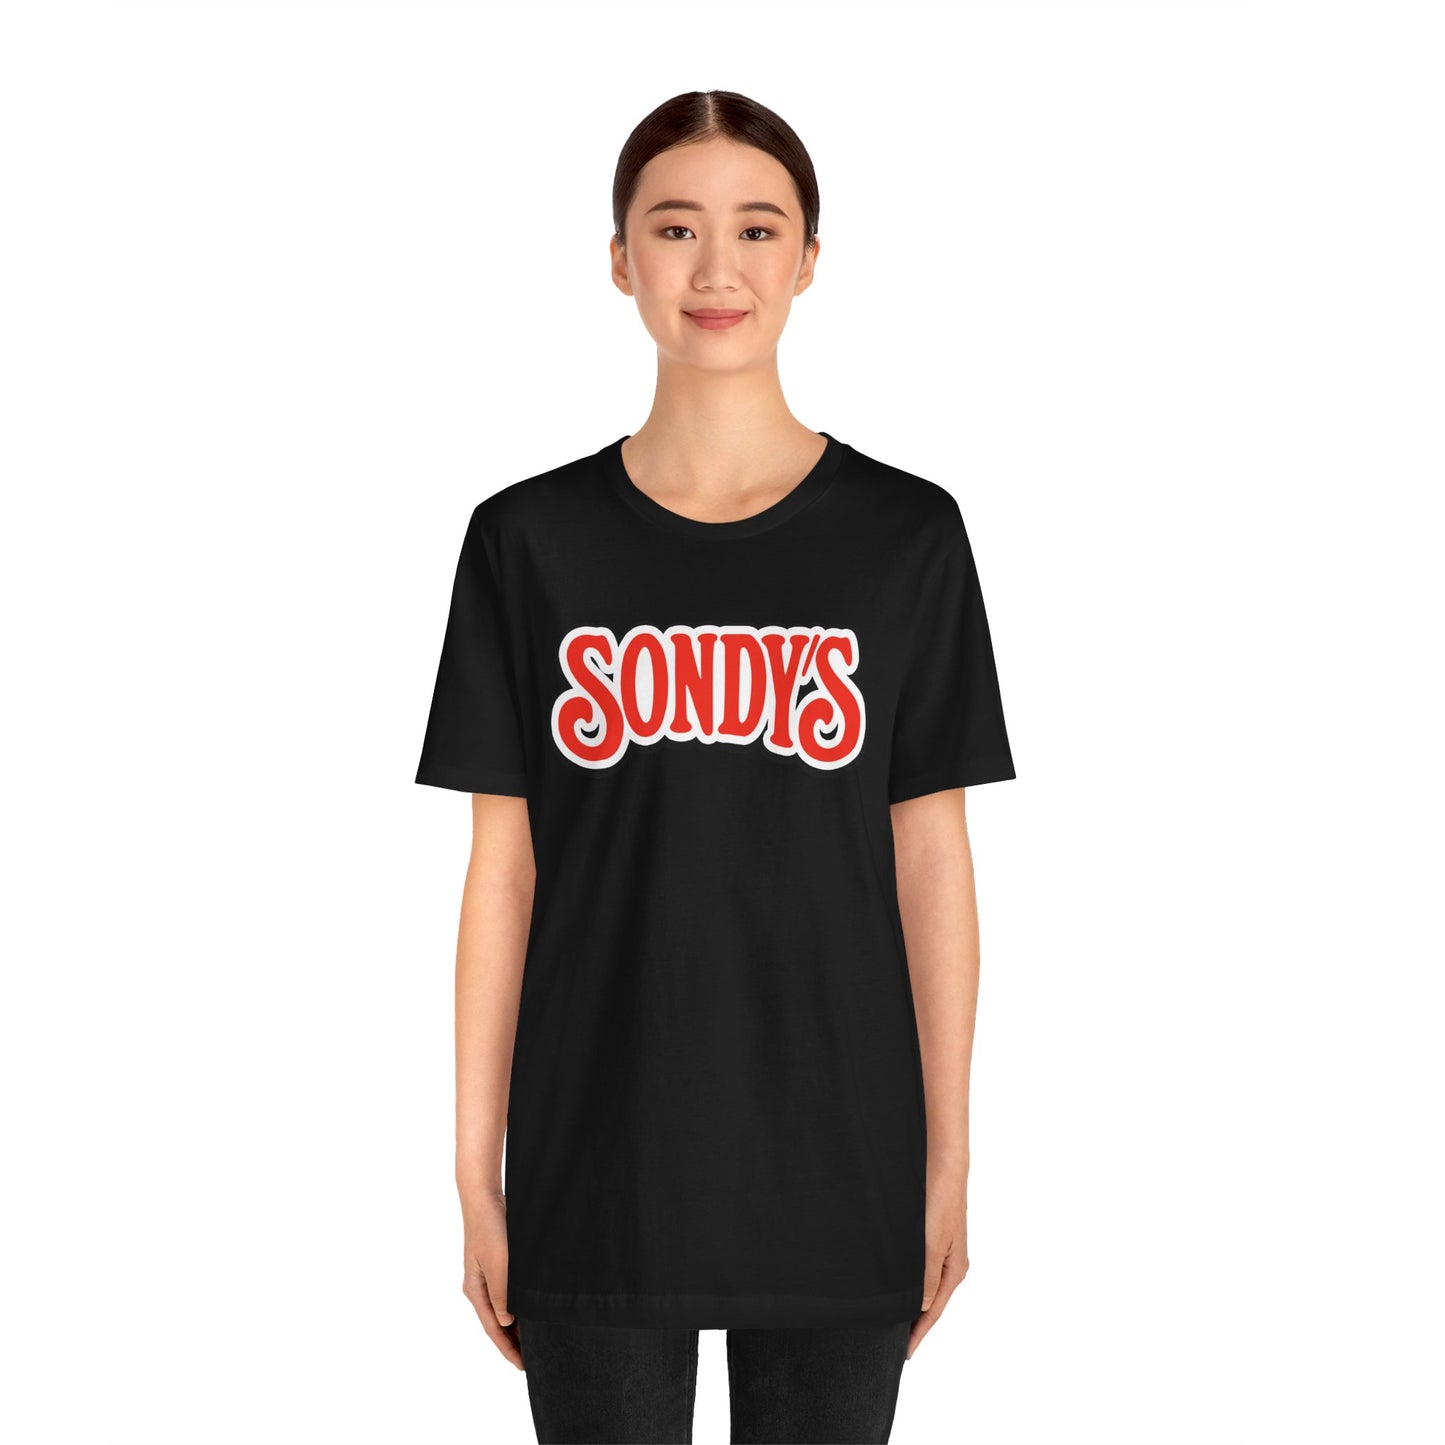 Sondy's Unisex Jersey Short Sleeve Tee